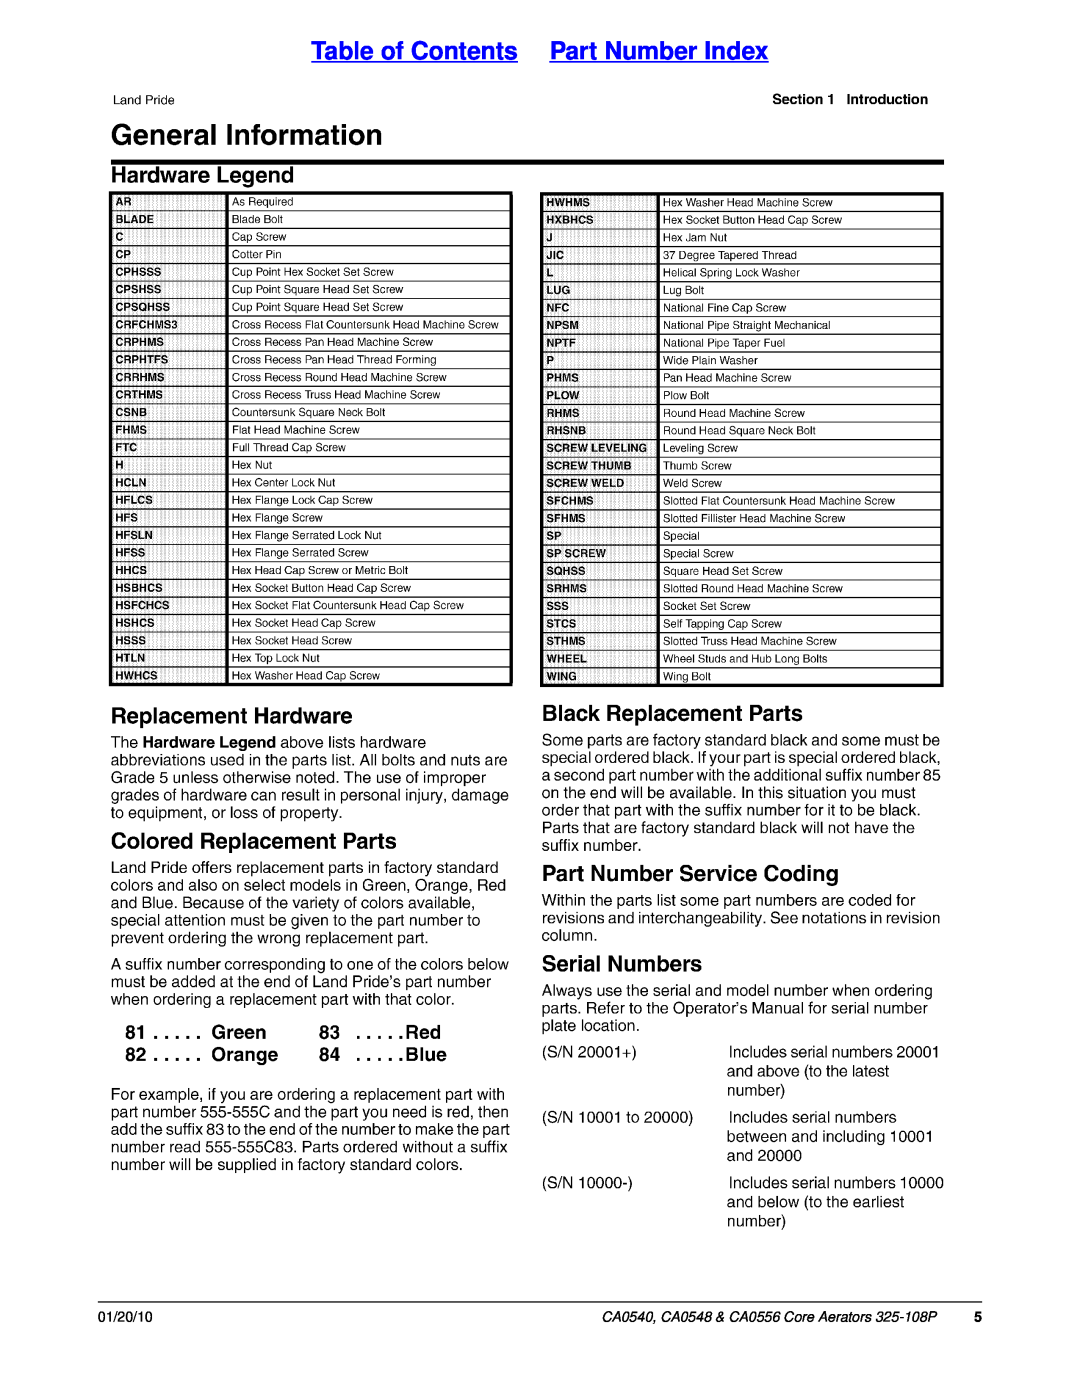 Land Pride manual Table of Contents Part Number Index, CA0540, CA0548 & CA0556 Core Aerators 325-108P, 01/20/10 